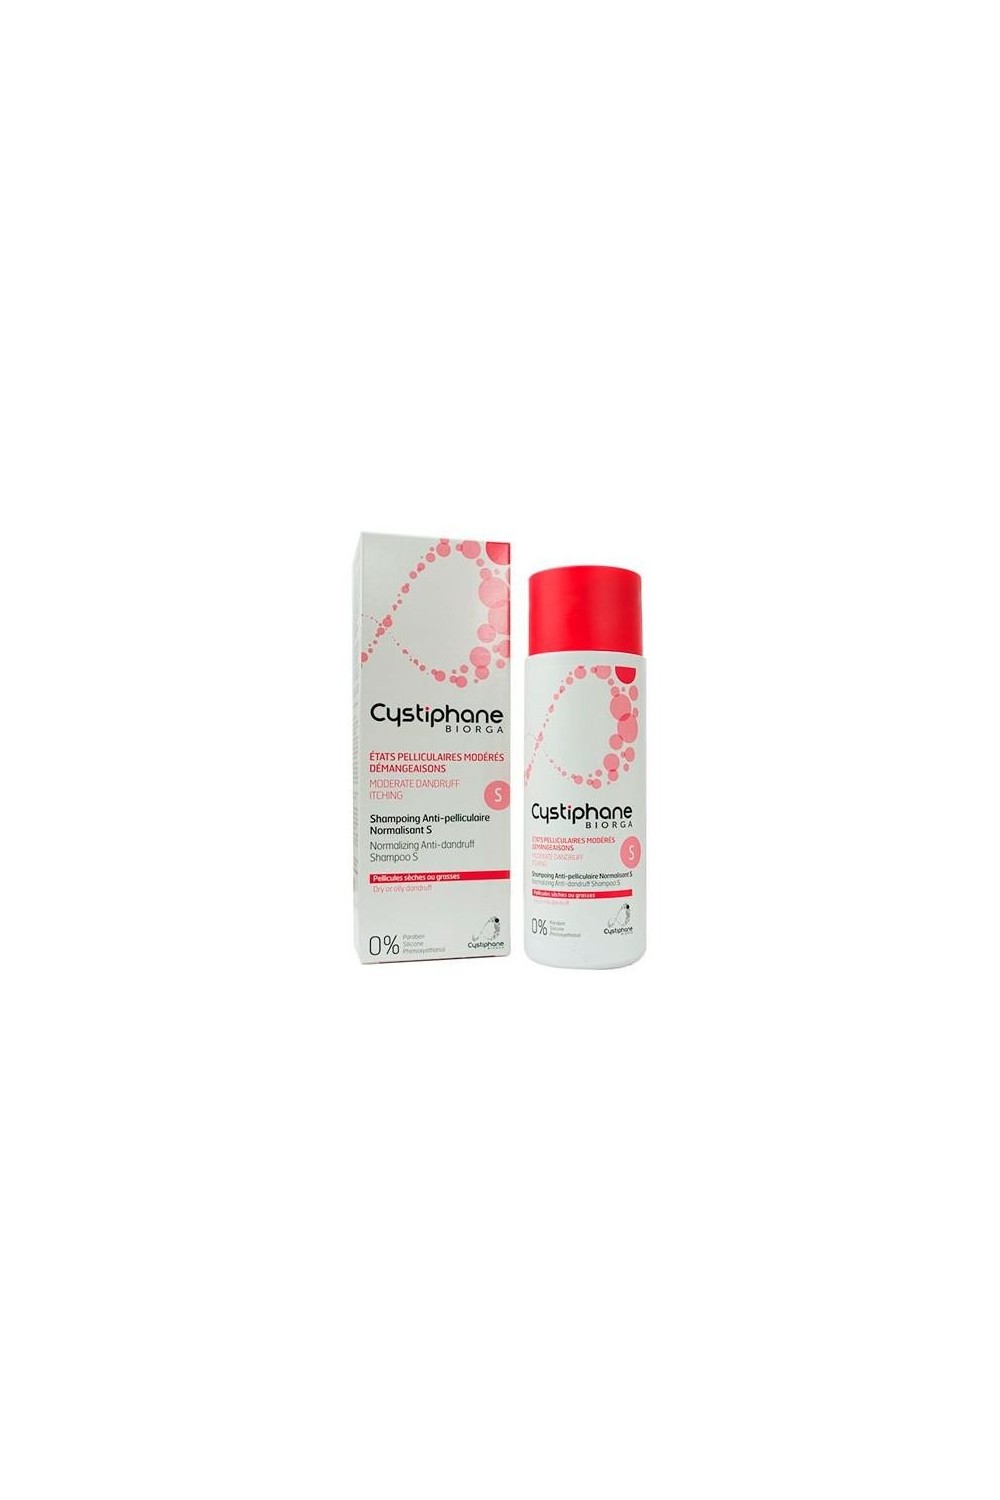 BIORGA - Cystiphane Gentle Anti-Dandruff Shampoo 200ml